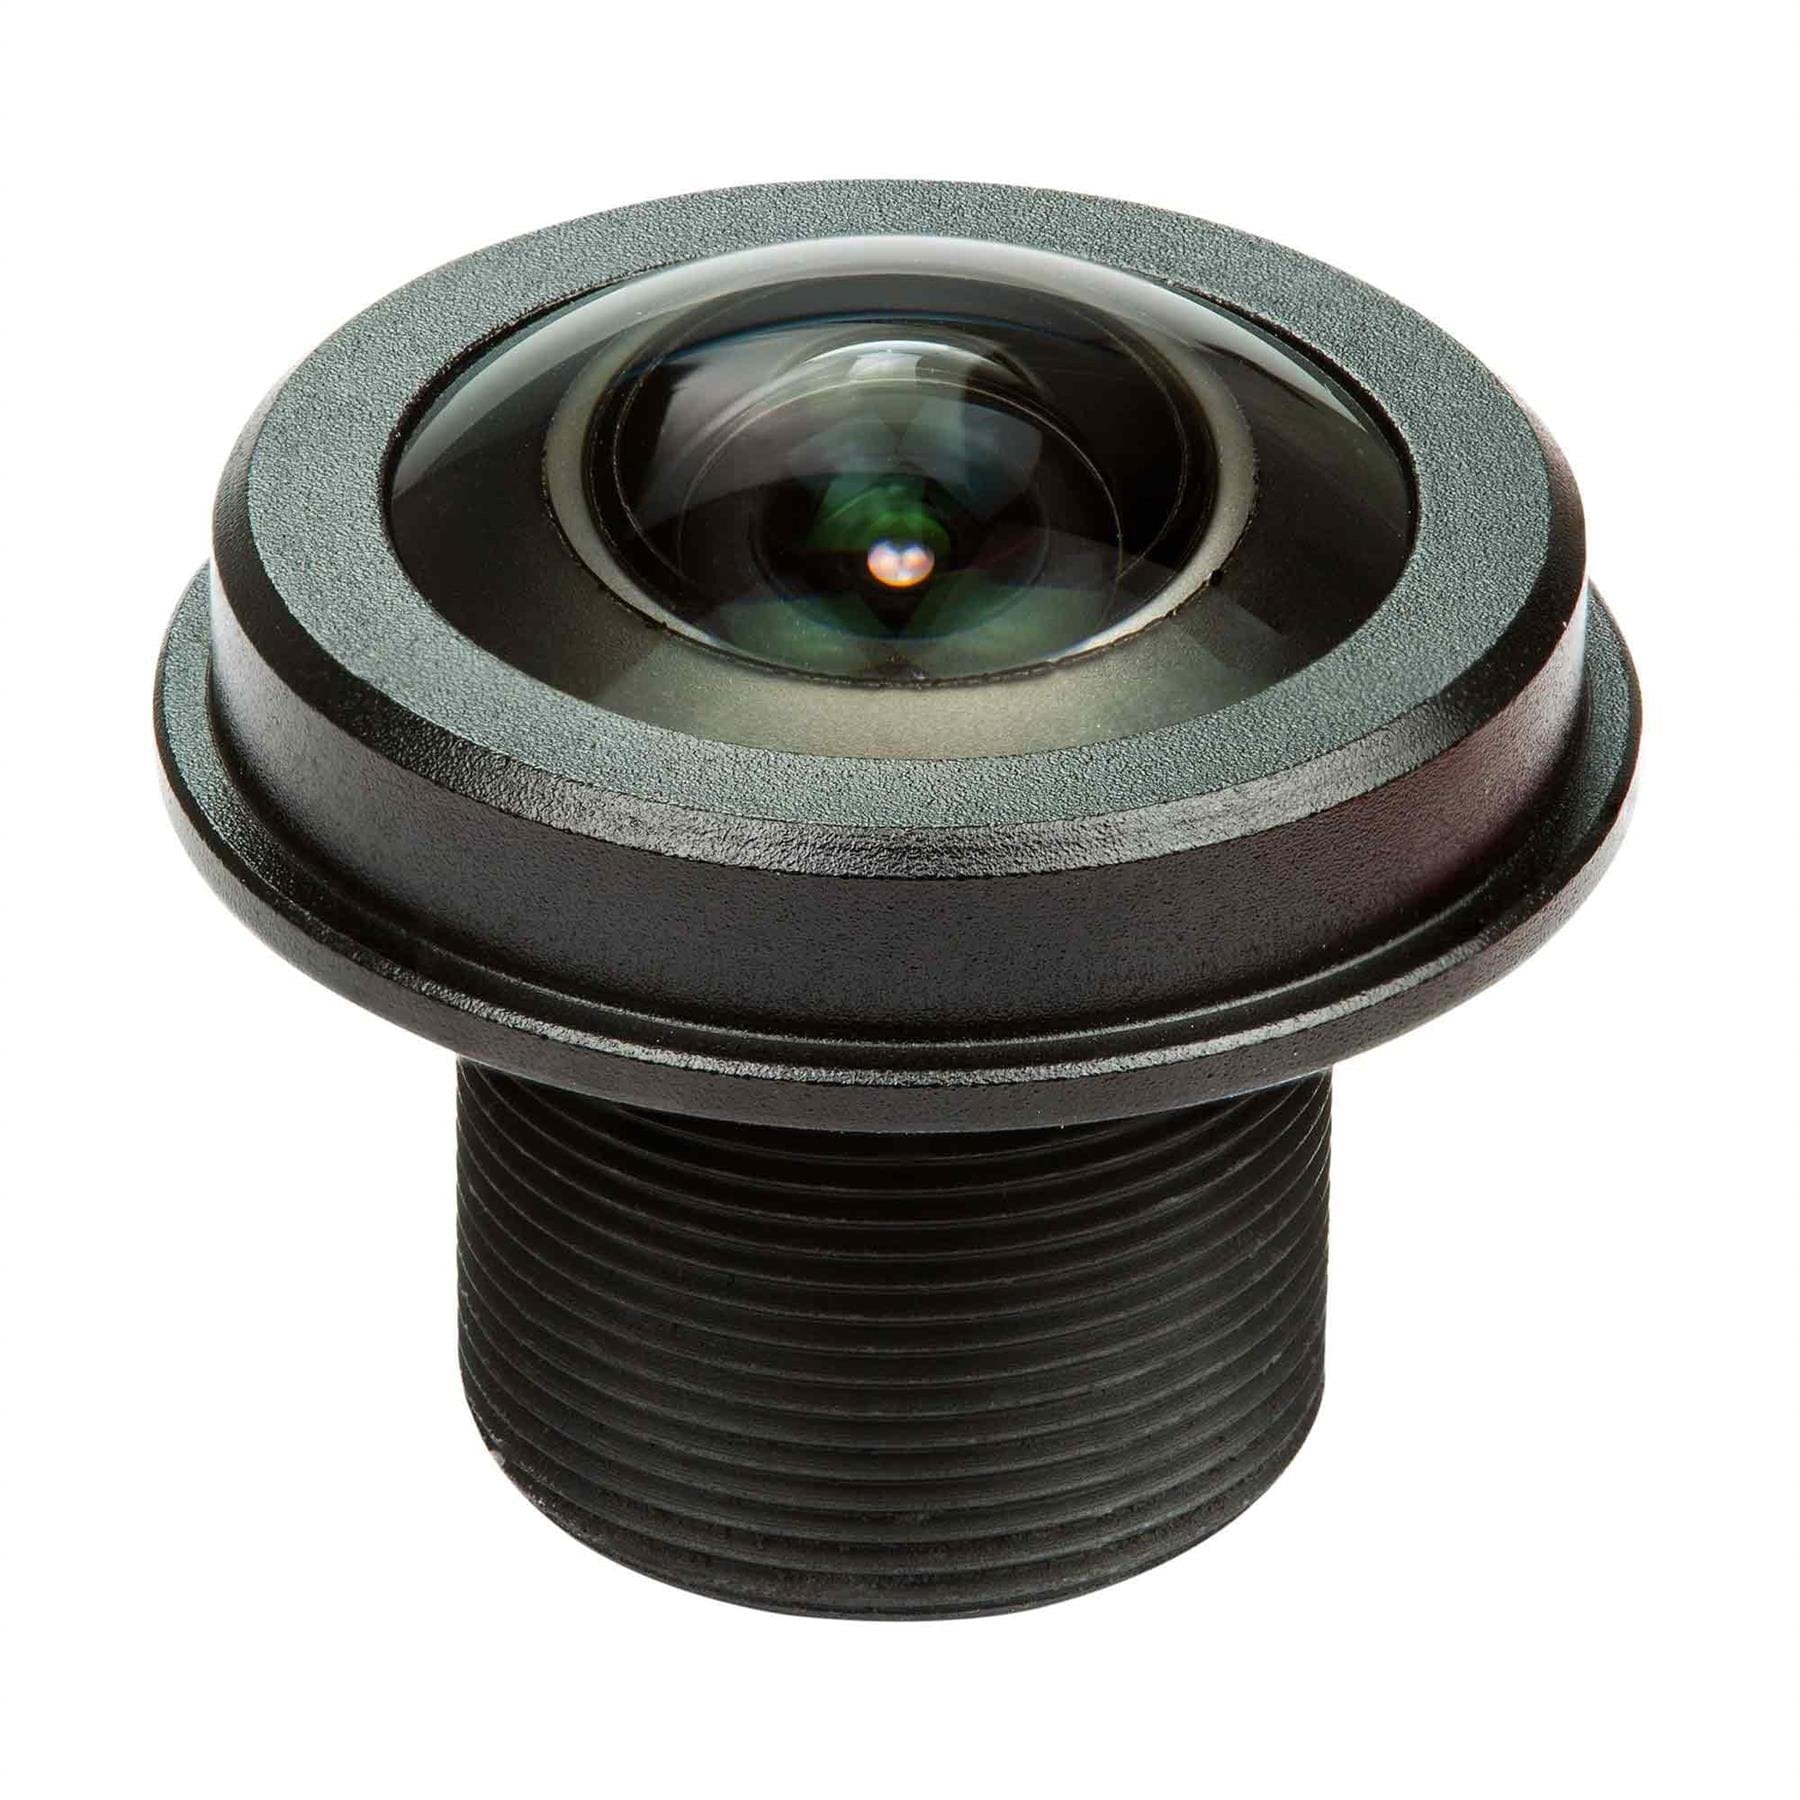 M12 Lens - 185-Degree Fisheye (1/2.5" Optical Format, 1.56mm Focal Length) - The Pi Hut